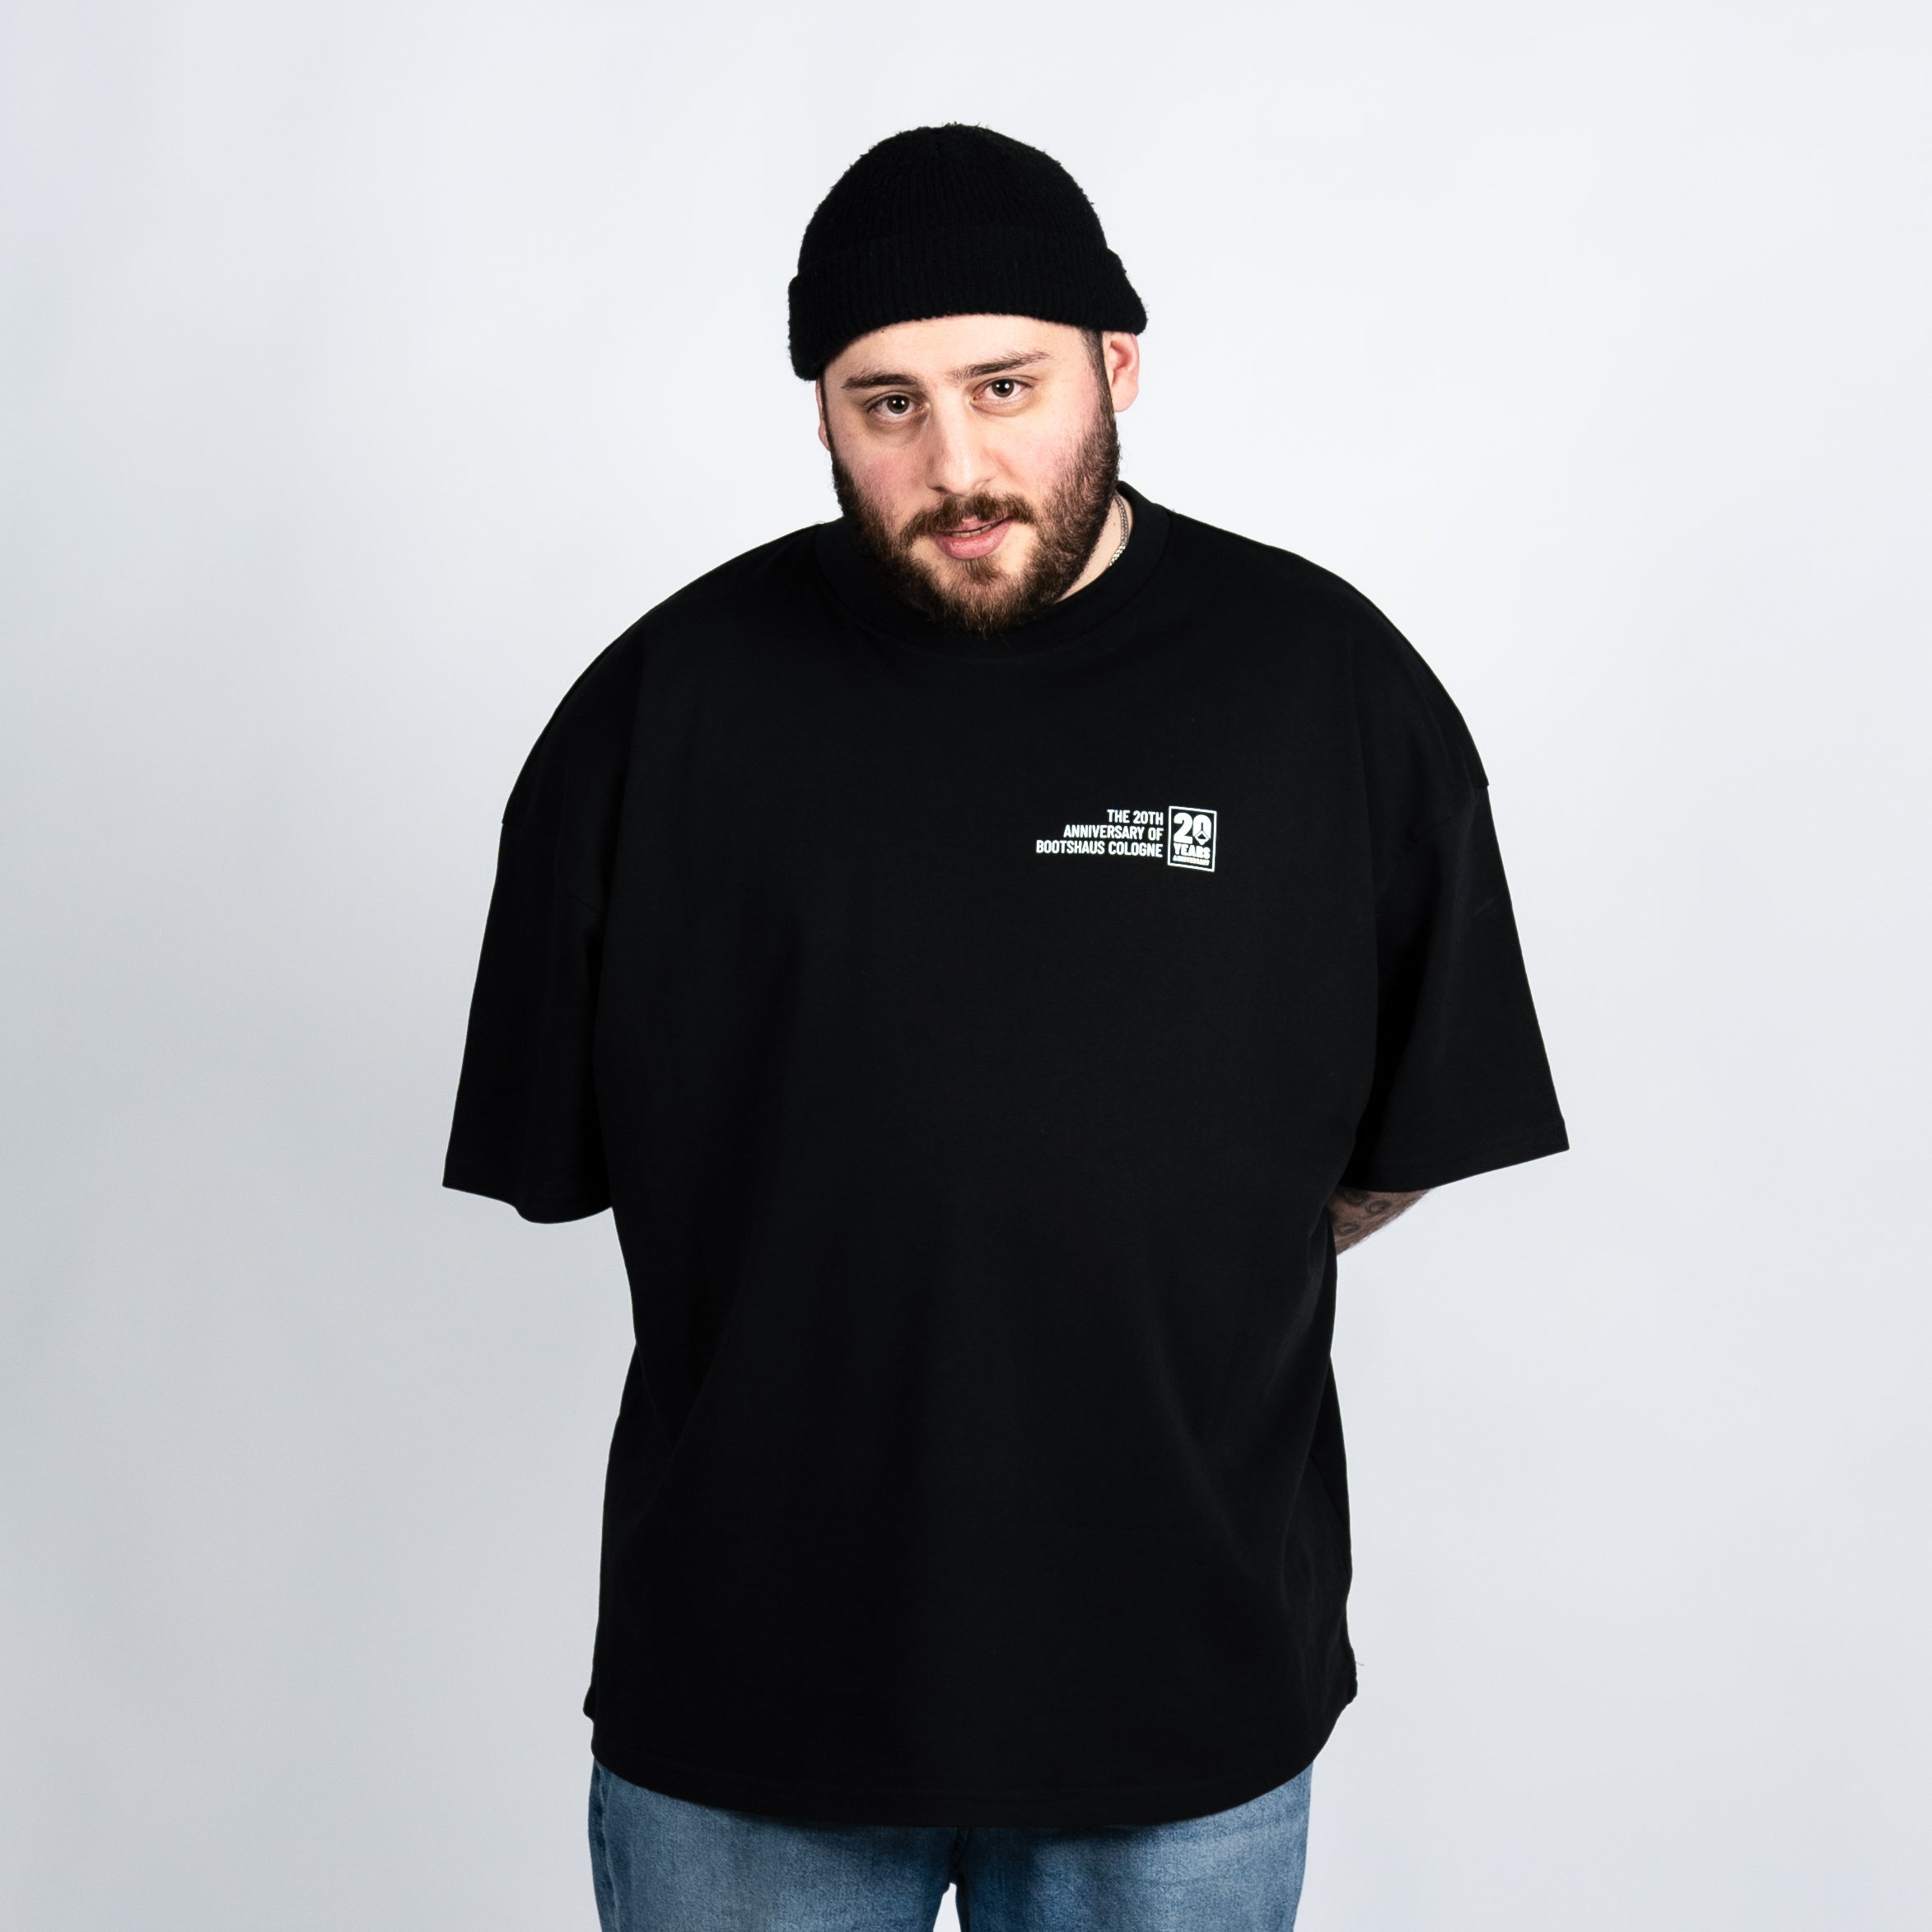 Bootshaus - ClubMap T-Shirt